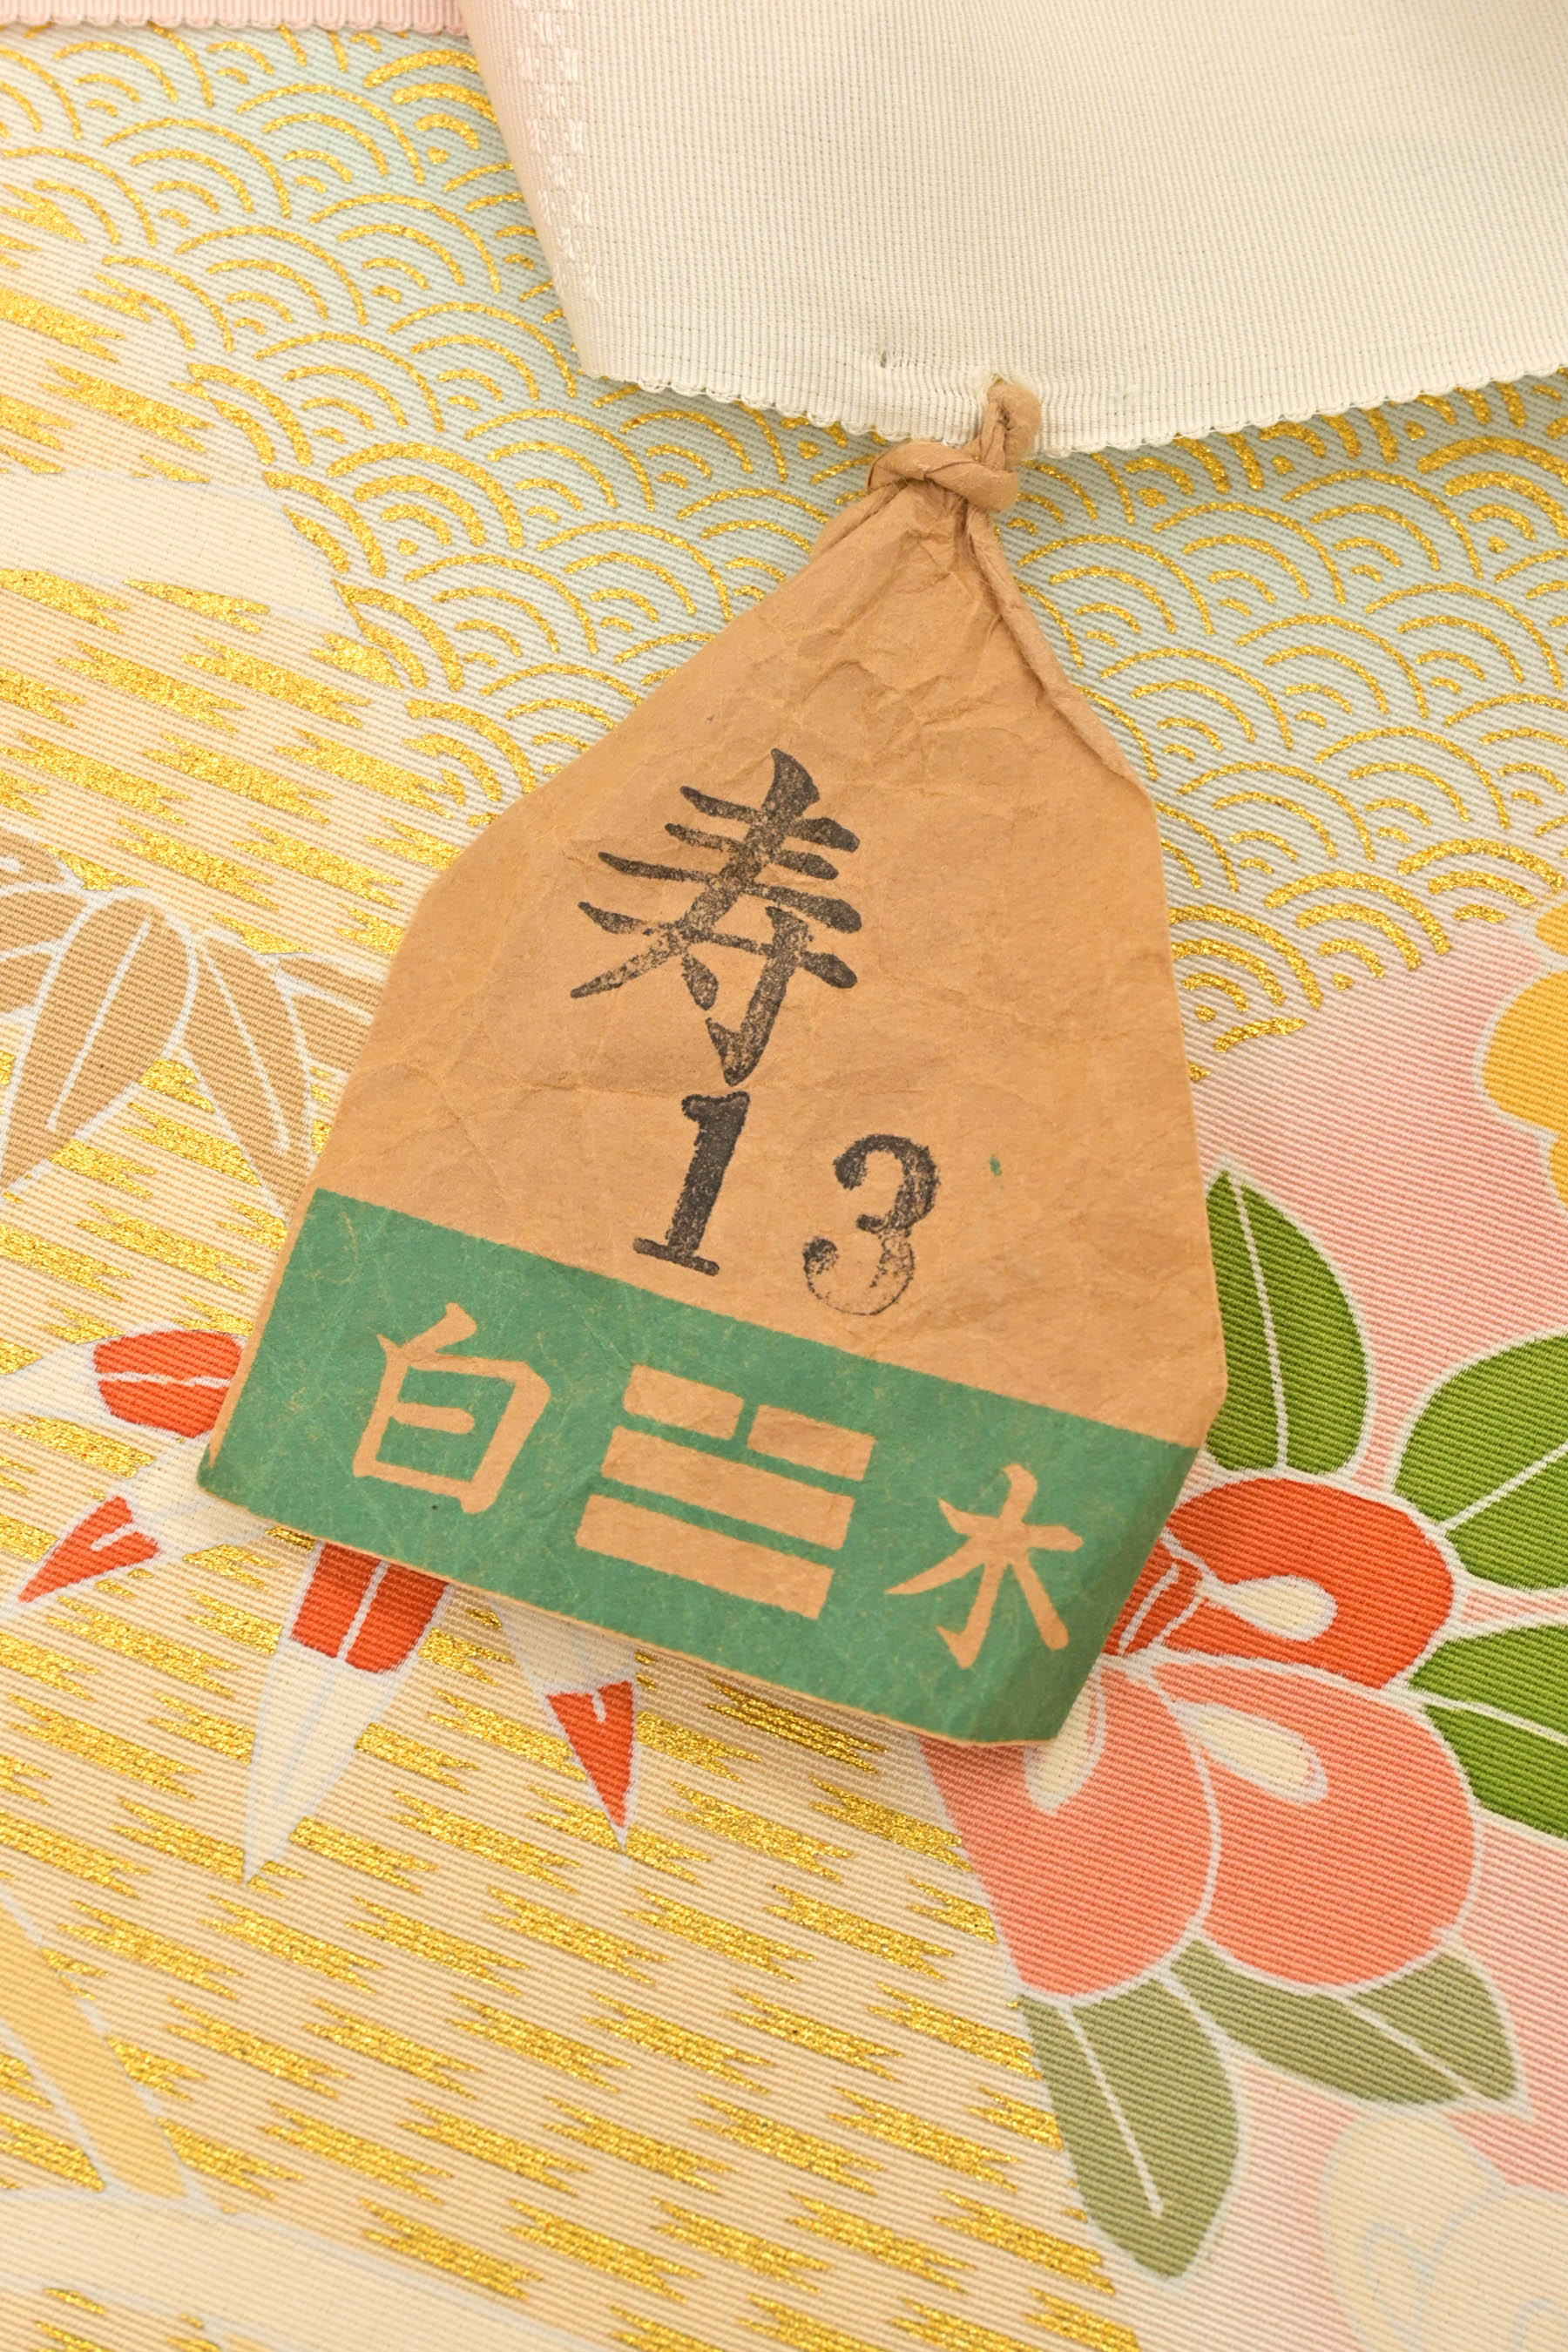 商品詳細   白木染匠 本手加工友禅訪問着 京都きもの市場公式